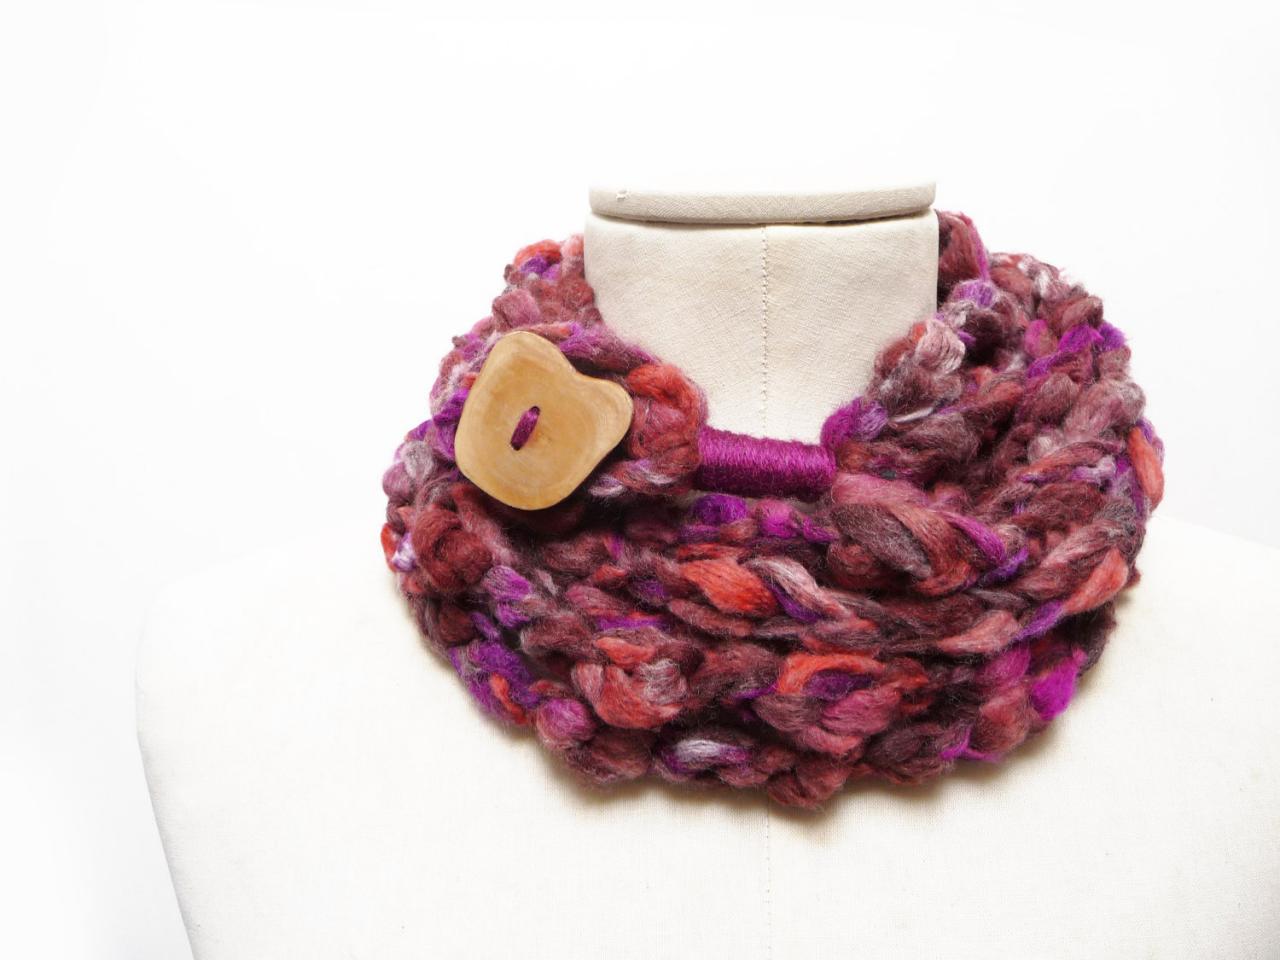 Loop Infinity Scarf Necklace, Crochet Scarflette Neckwarmer - Purple, Brown, Orange Multicolor Yarn With Giant Wood Button